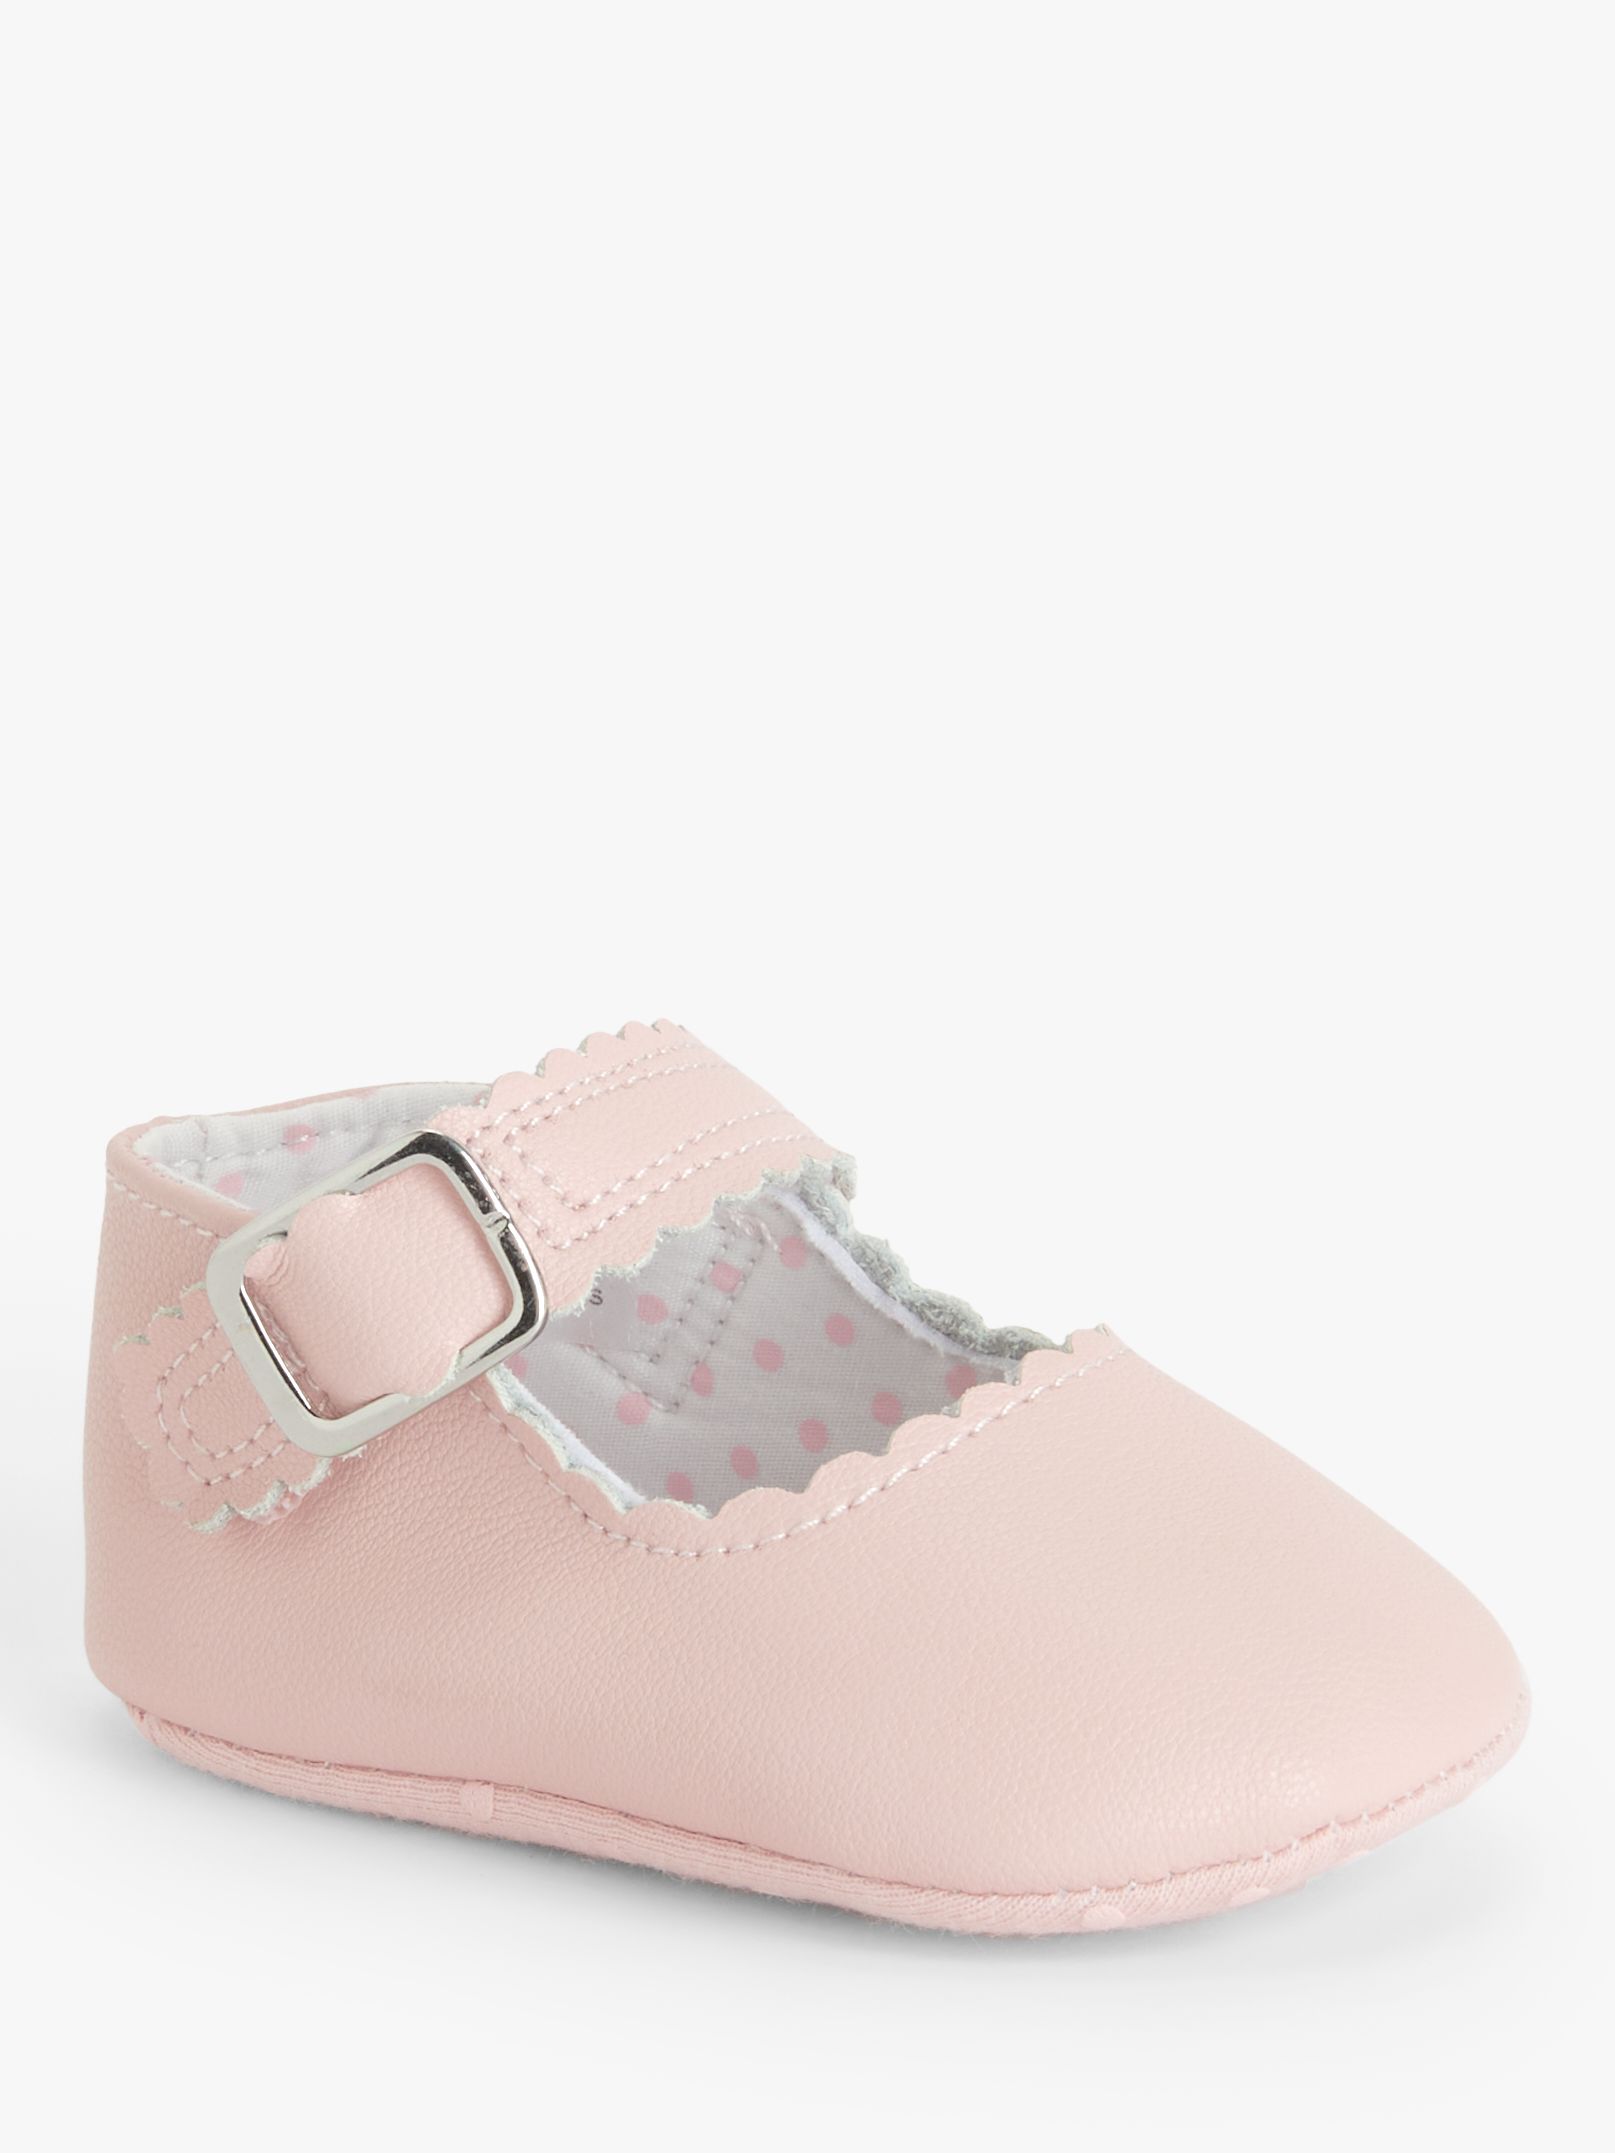 Gaorui Baby Prewalker Sandals Toddler Boy Girls First Walker Slippers Anti-Slip Sneaker Summer Shoes 